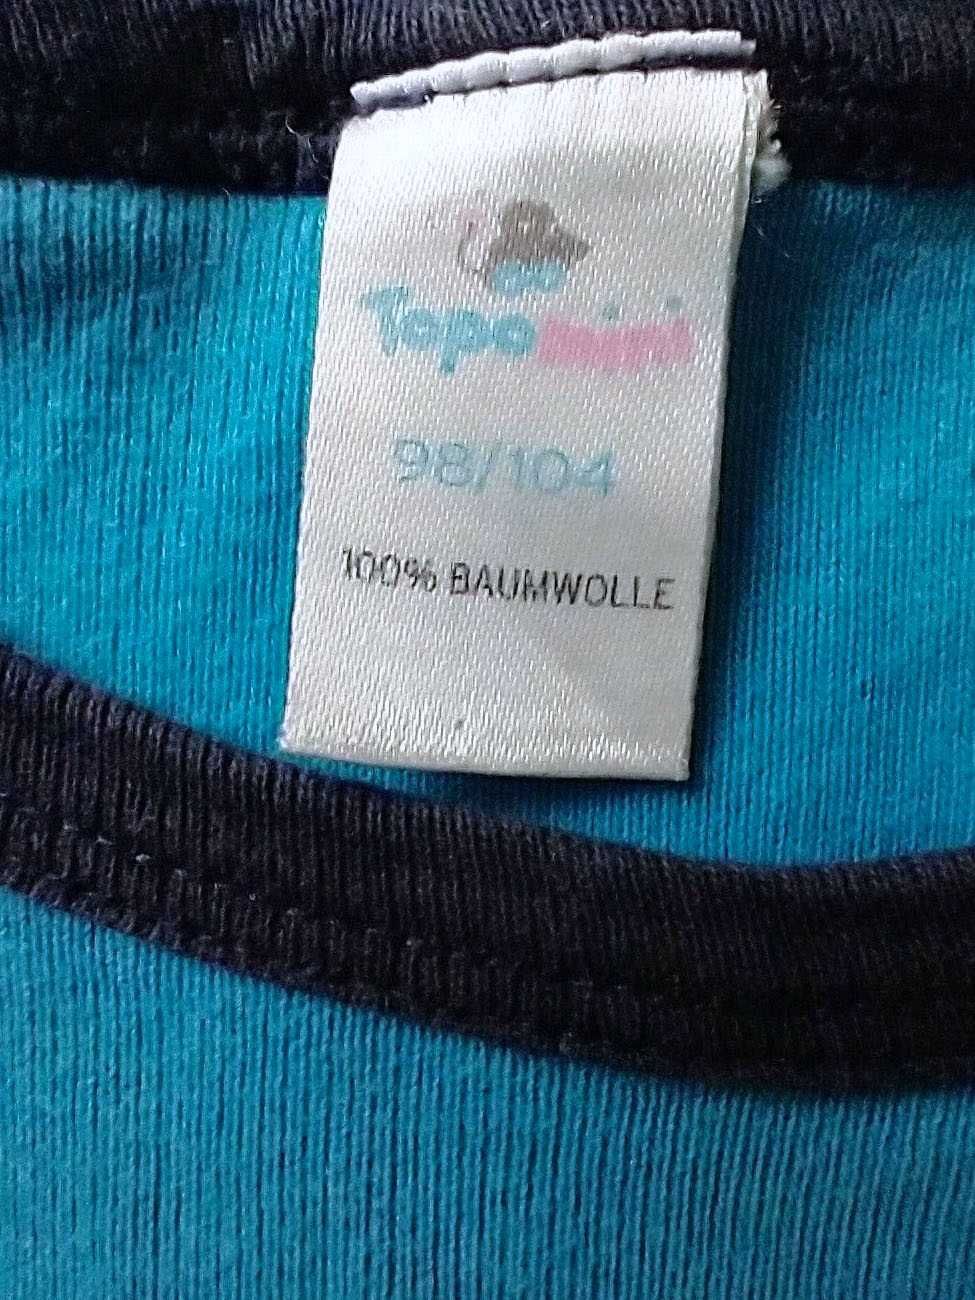 2 bluzki marki Topomini rozmiar 98-104cm